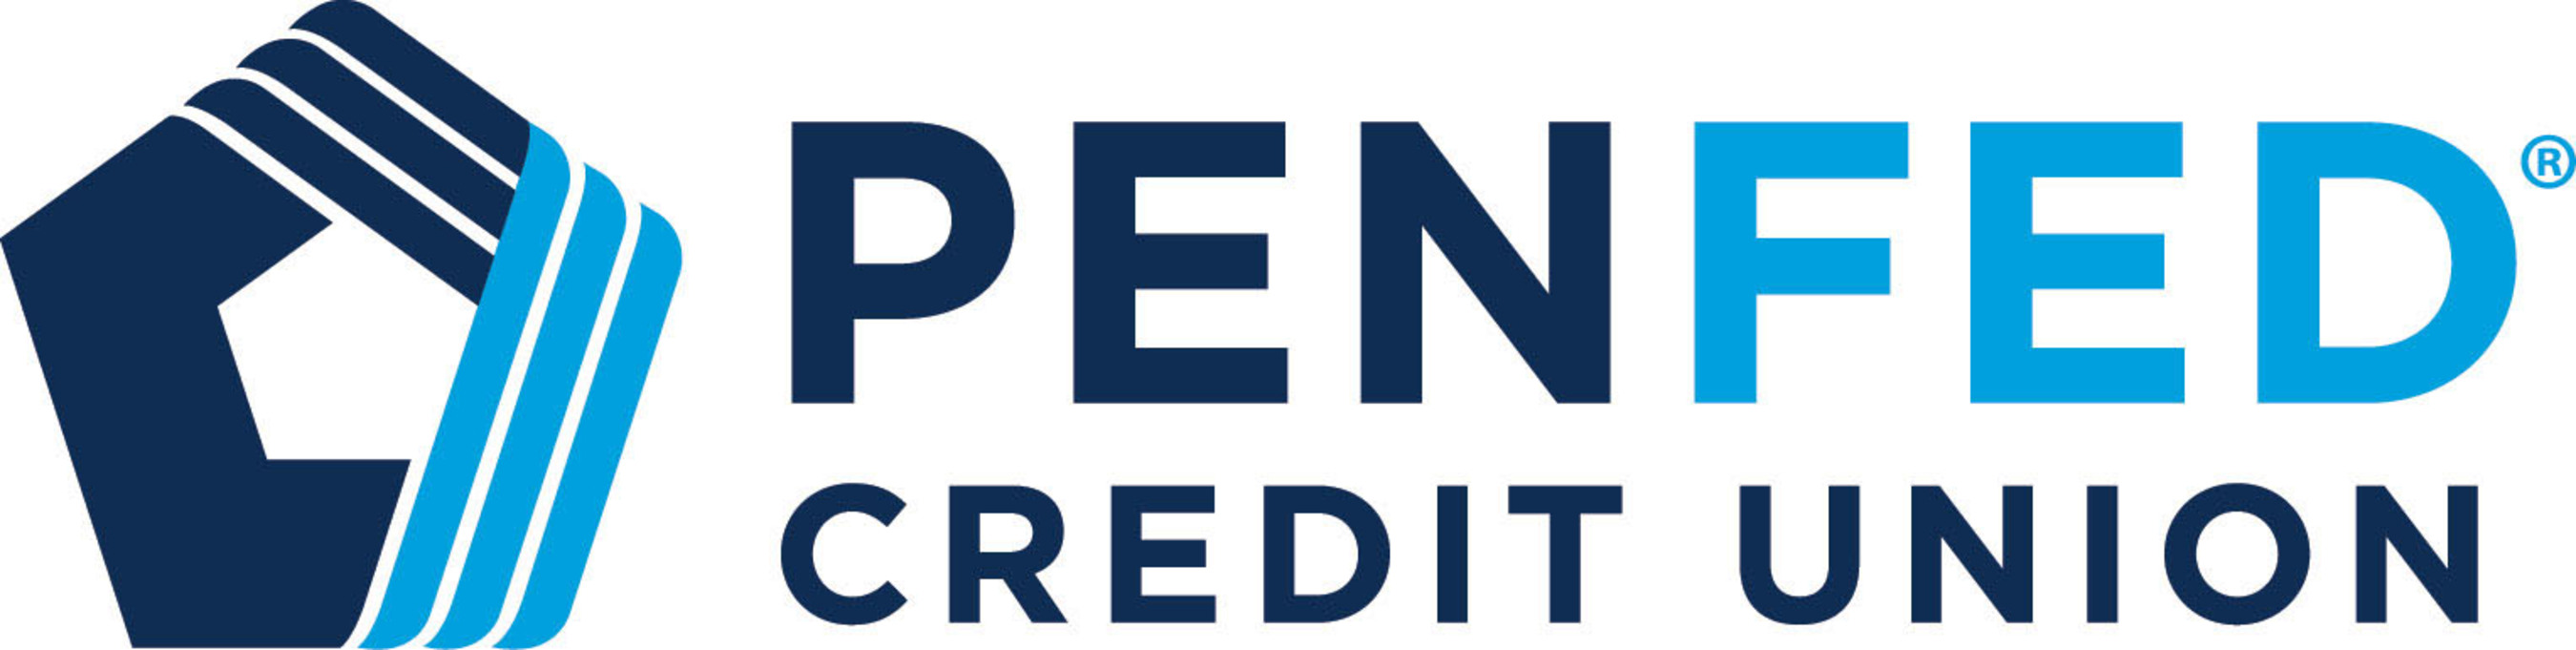 Image result for penfed logo